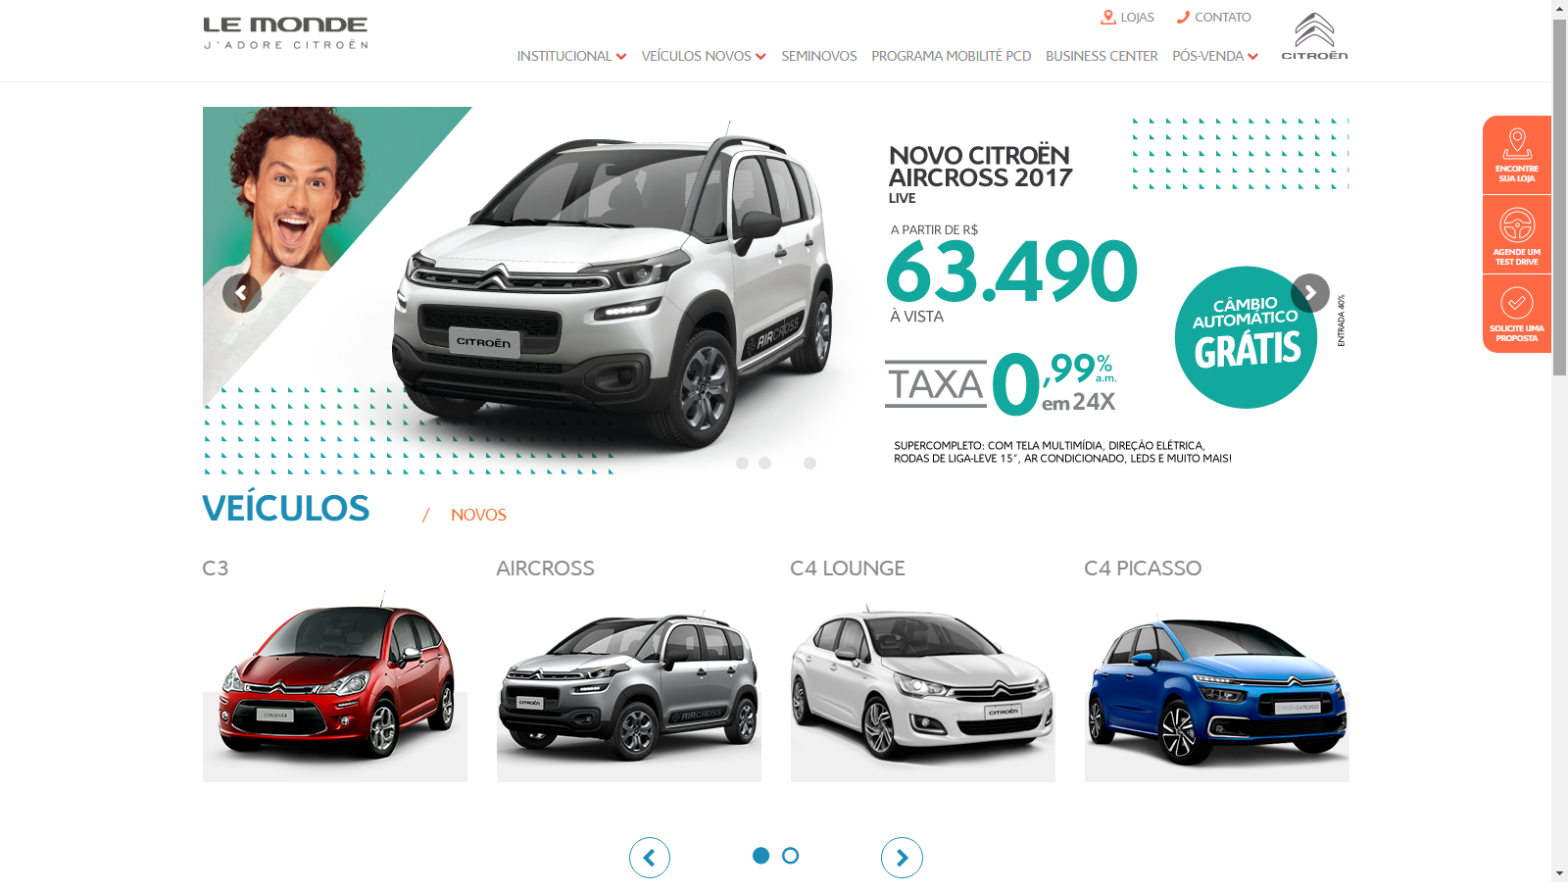 Labbo desenvolve novo site da Le Monde Citroën